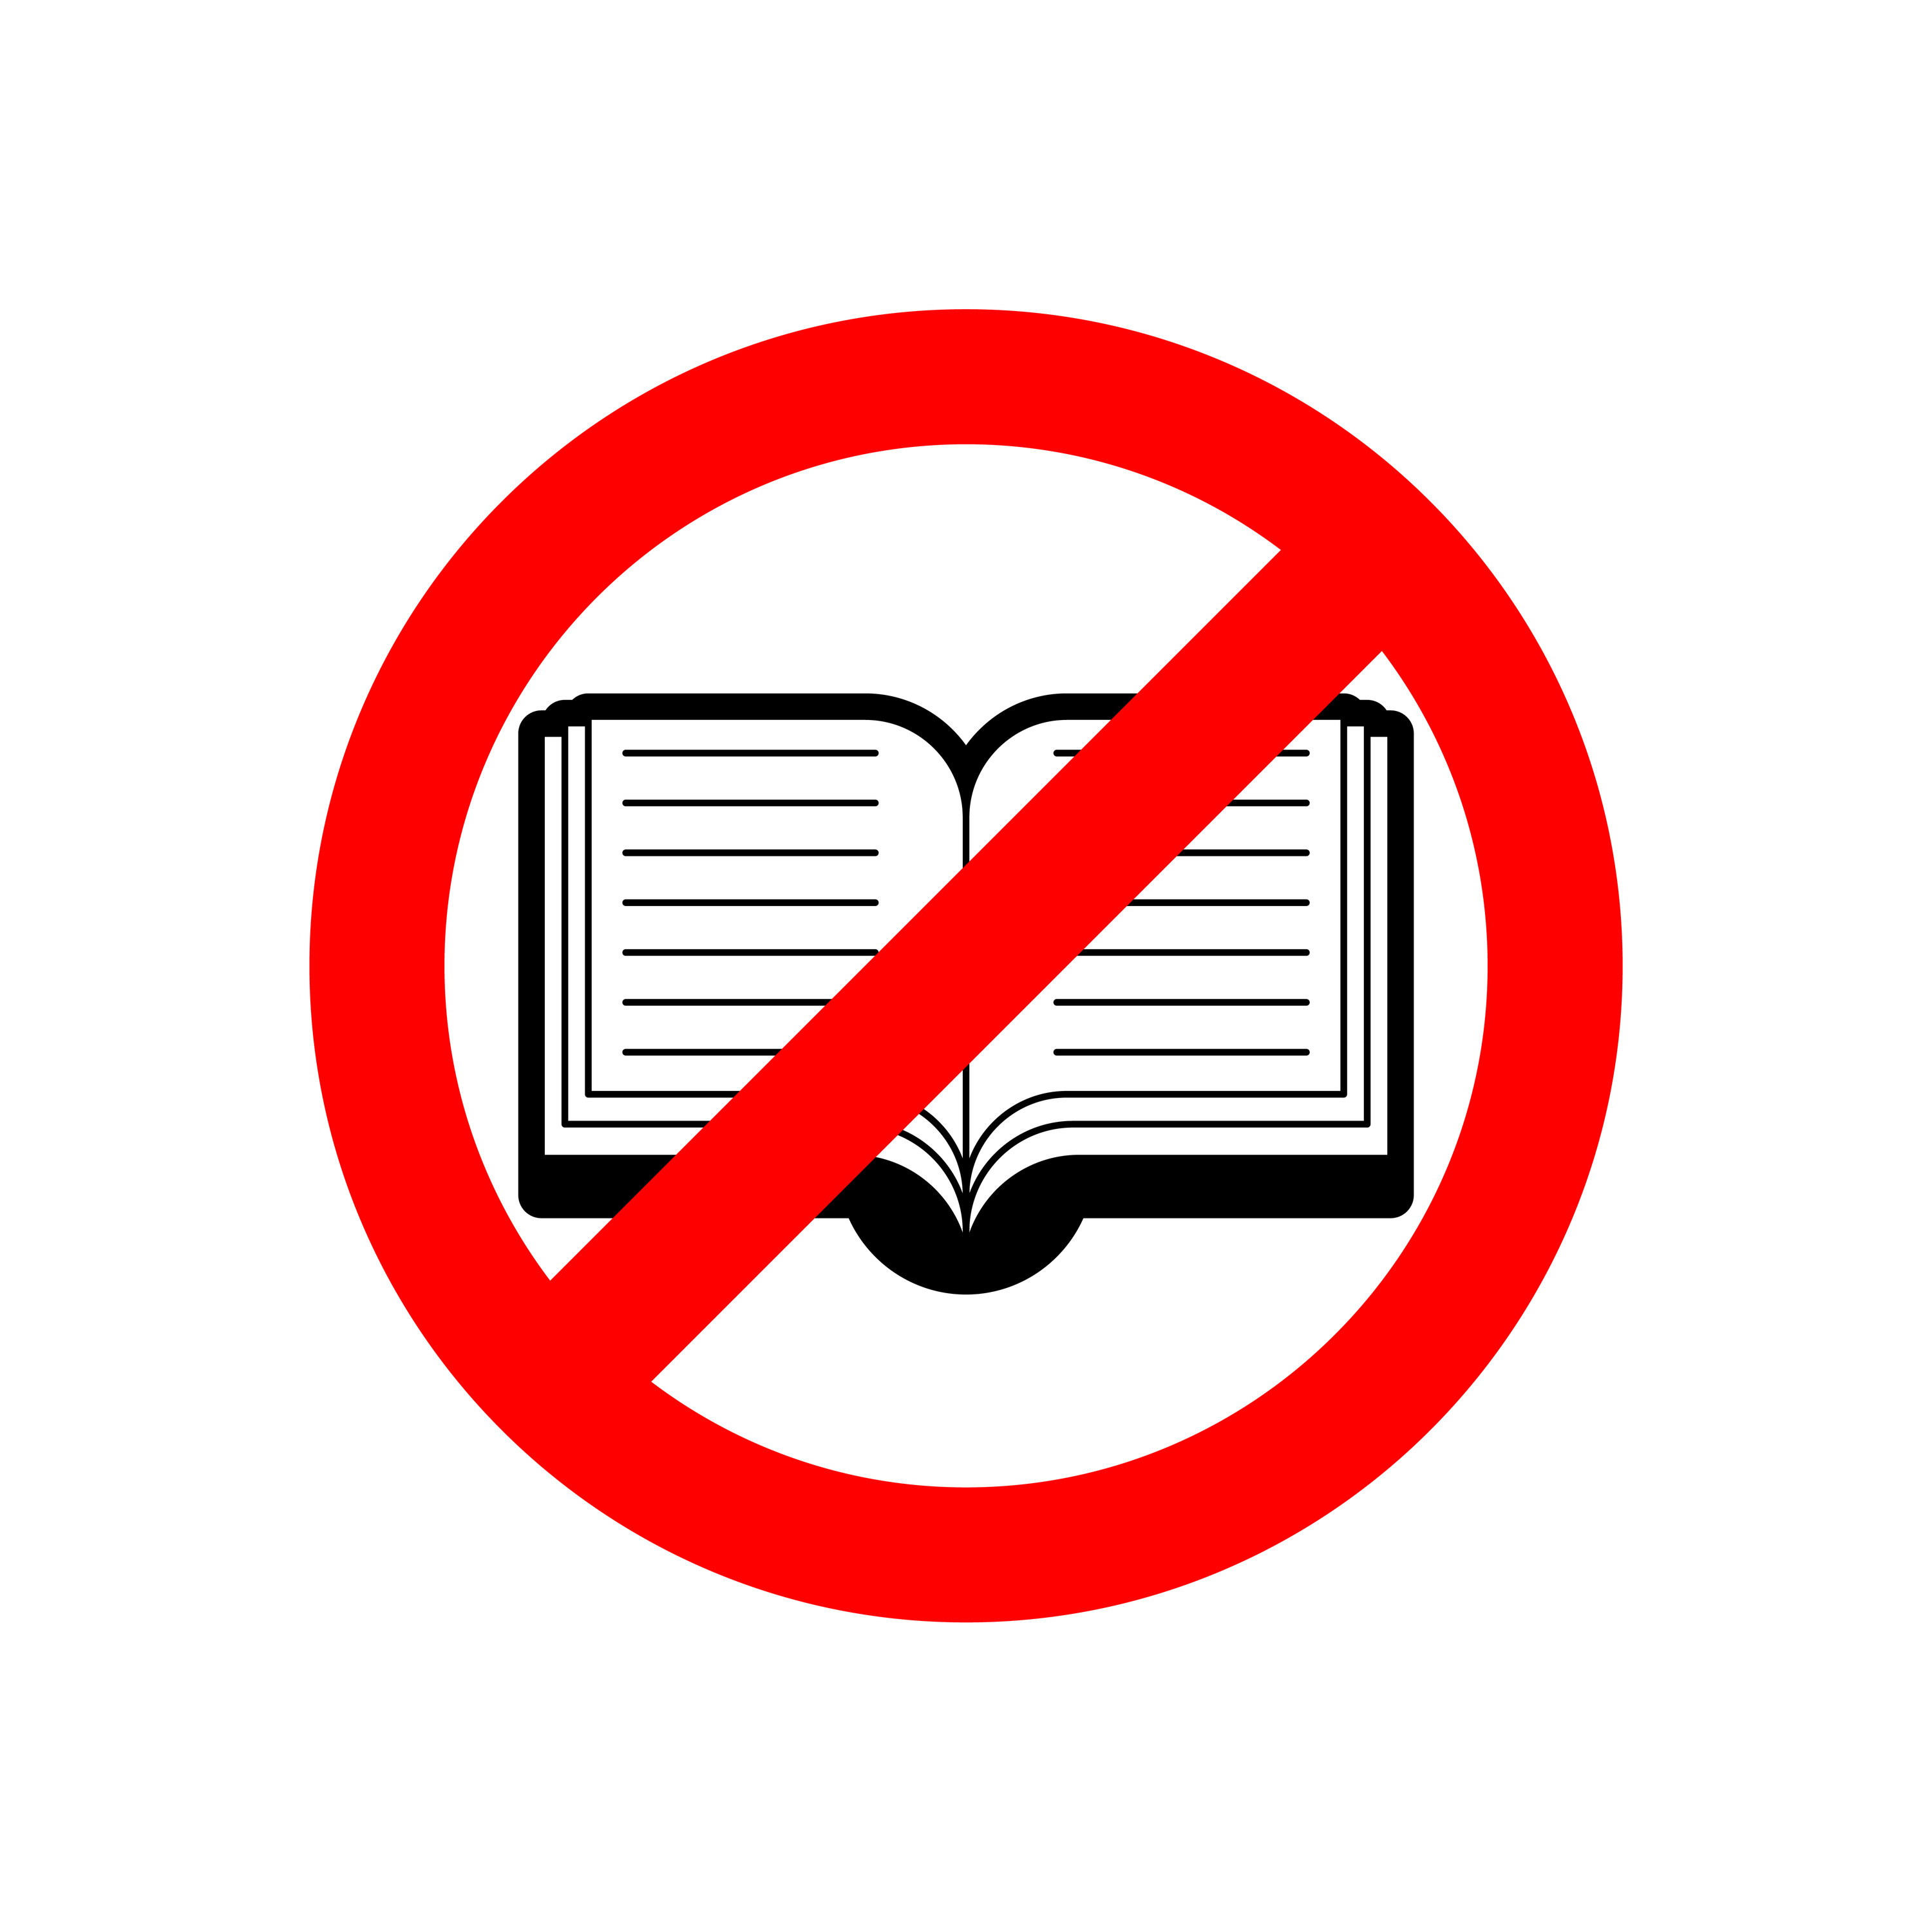 Книга ее запрет. Запрет книг. Знак книжка с i. Знак книга запрещена. Фото запрета чтения.